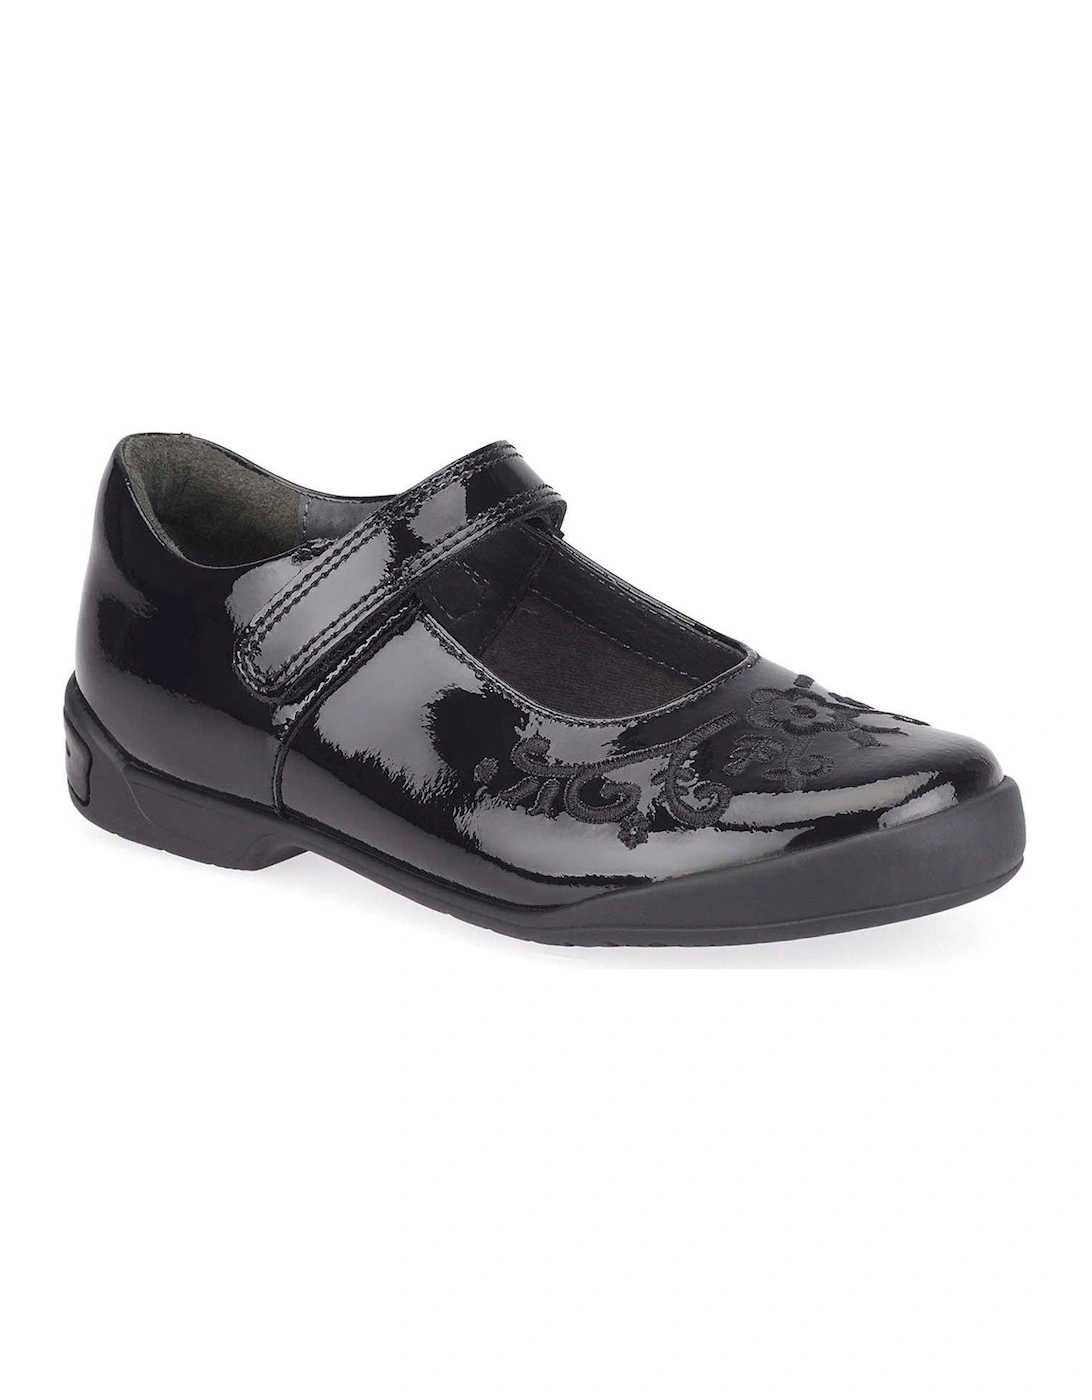 Hopscotch Leather Mary Jane Riptape Girls School Shoes - Black Patent, 3 of 2